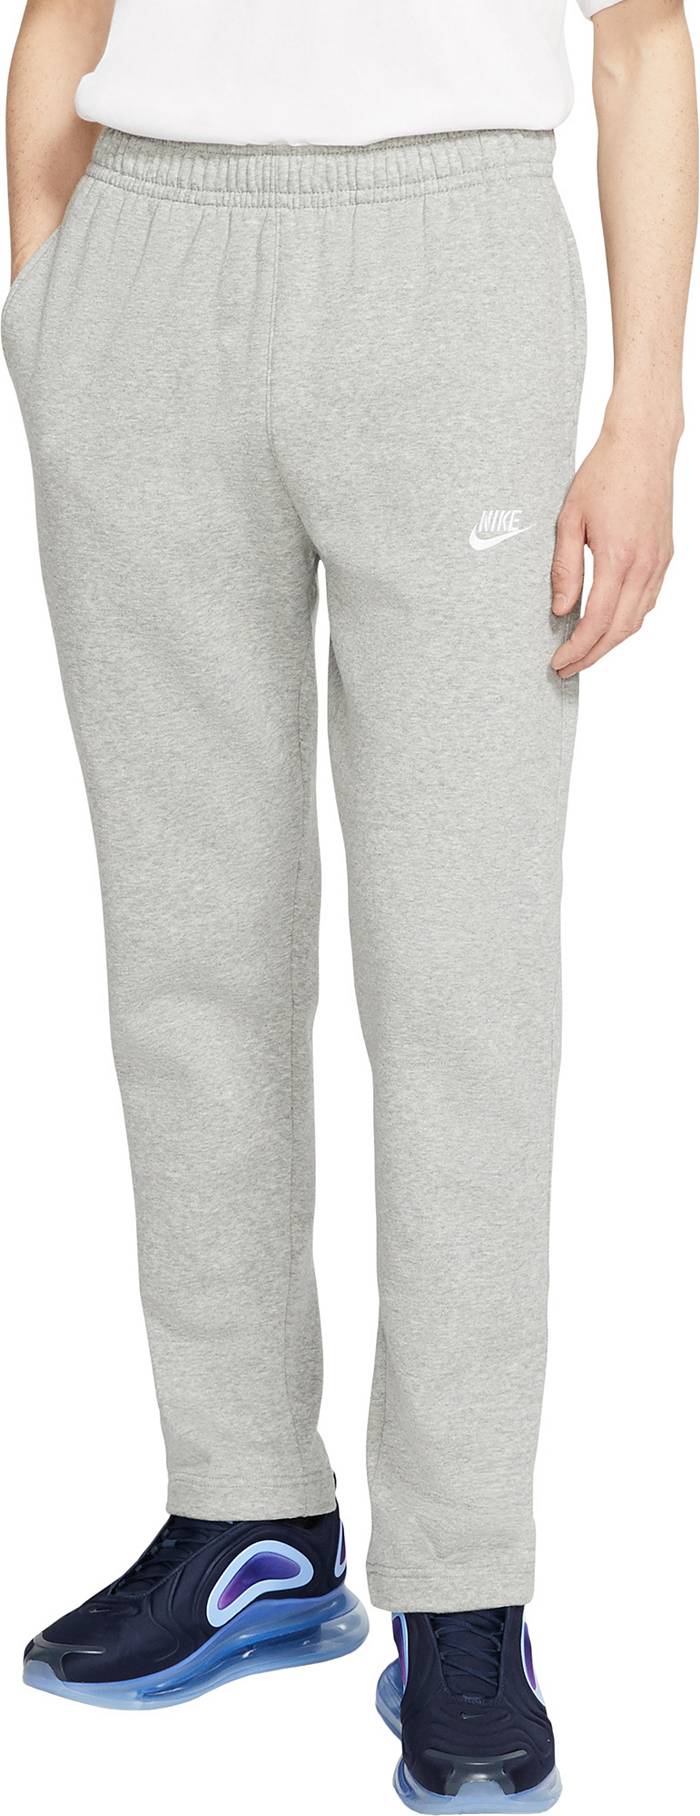 Nike Men's Club Fleece Sweatpants Available at DICK'S